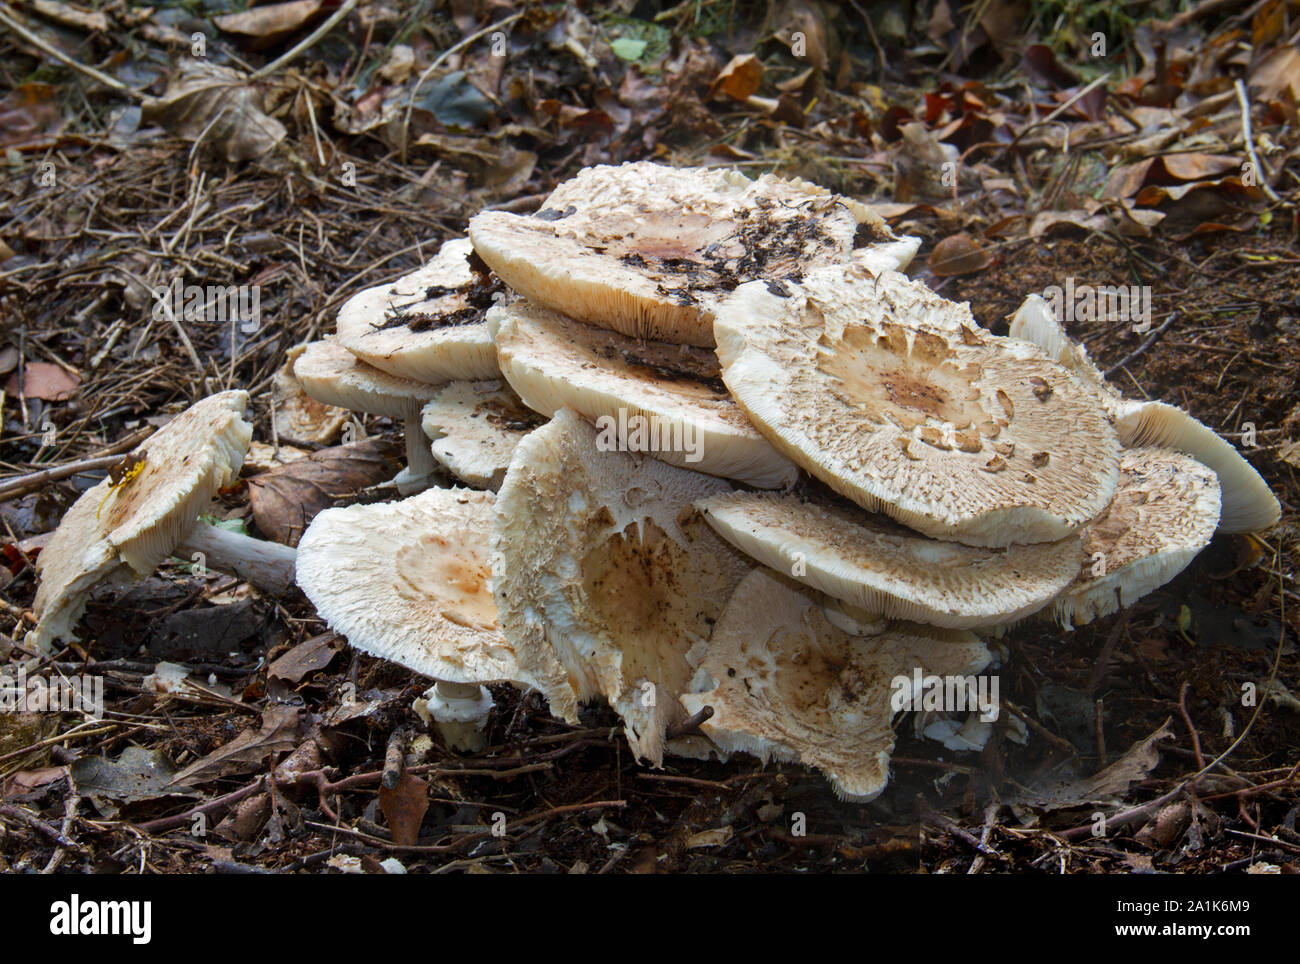 Cluster of Shaggy parasols, large white edible mushrooms Stock Photo